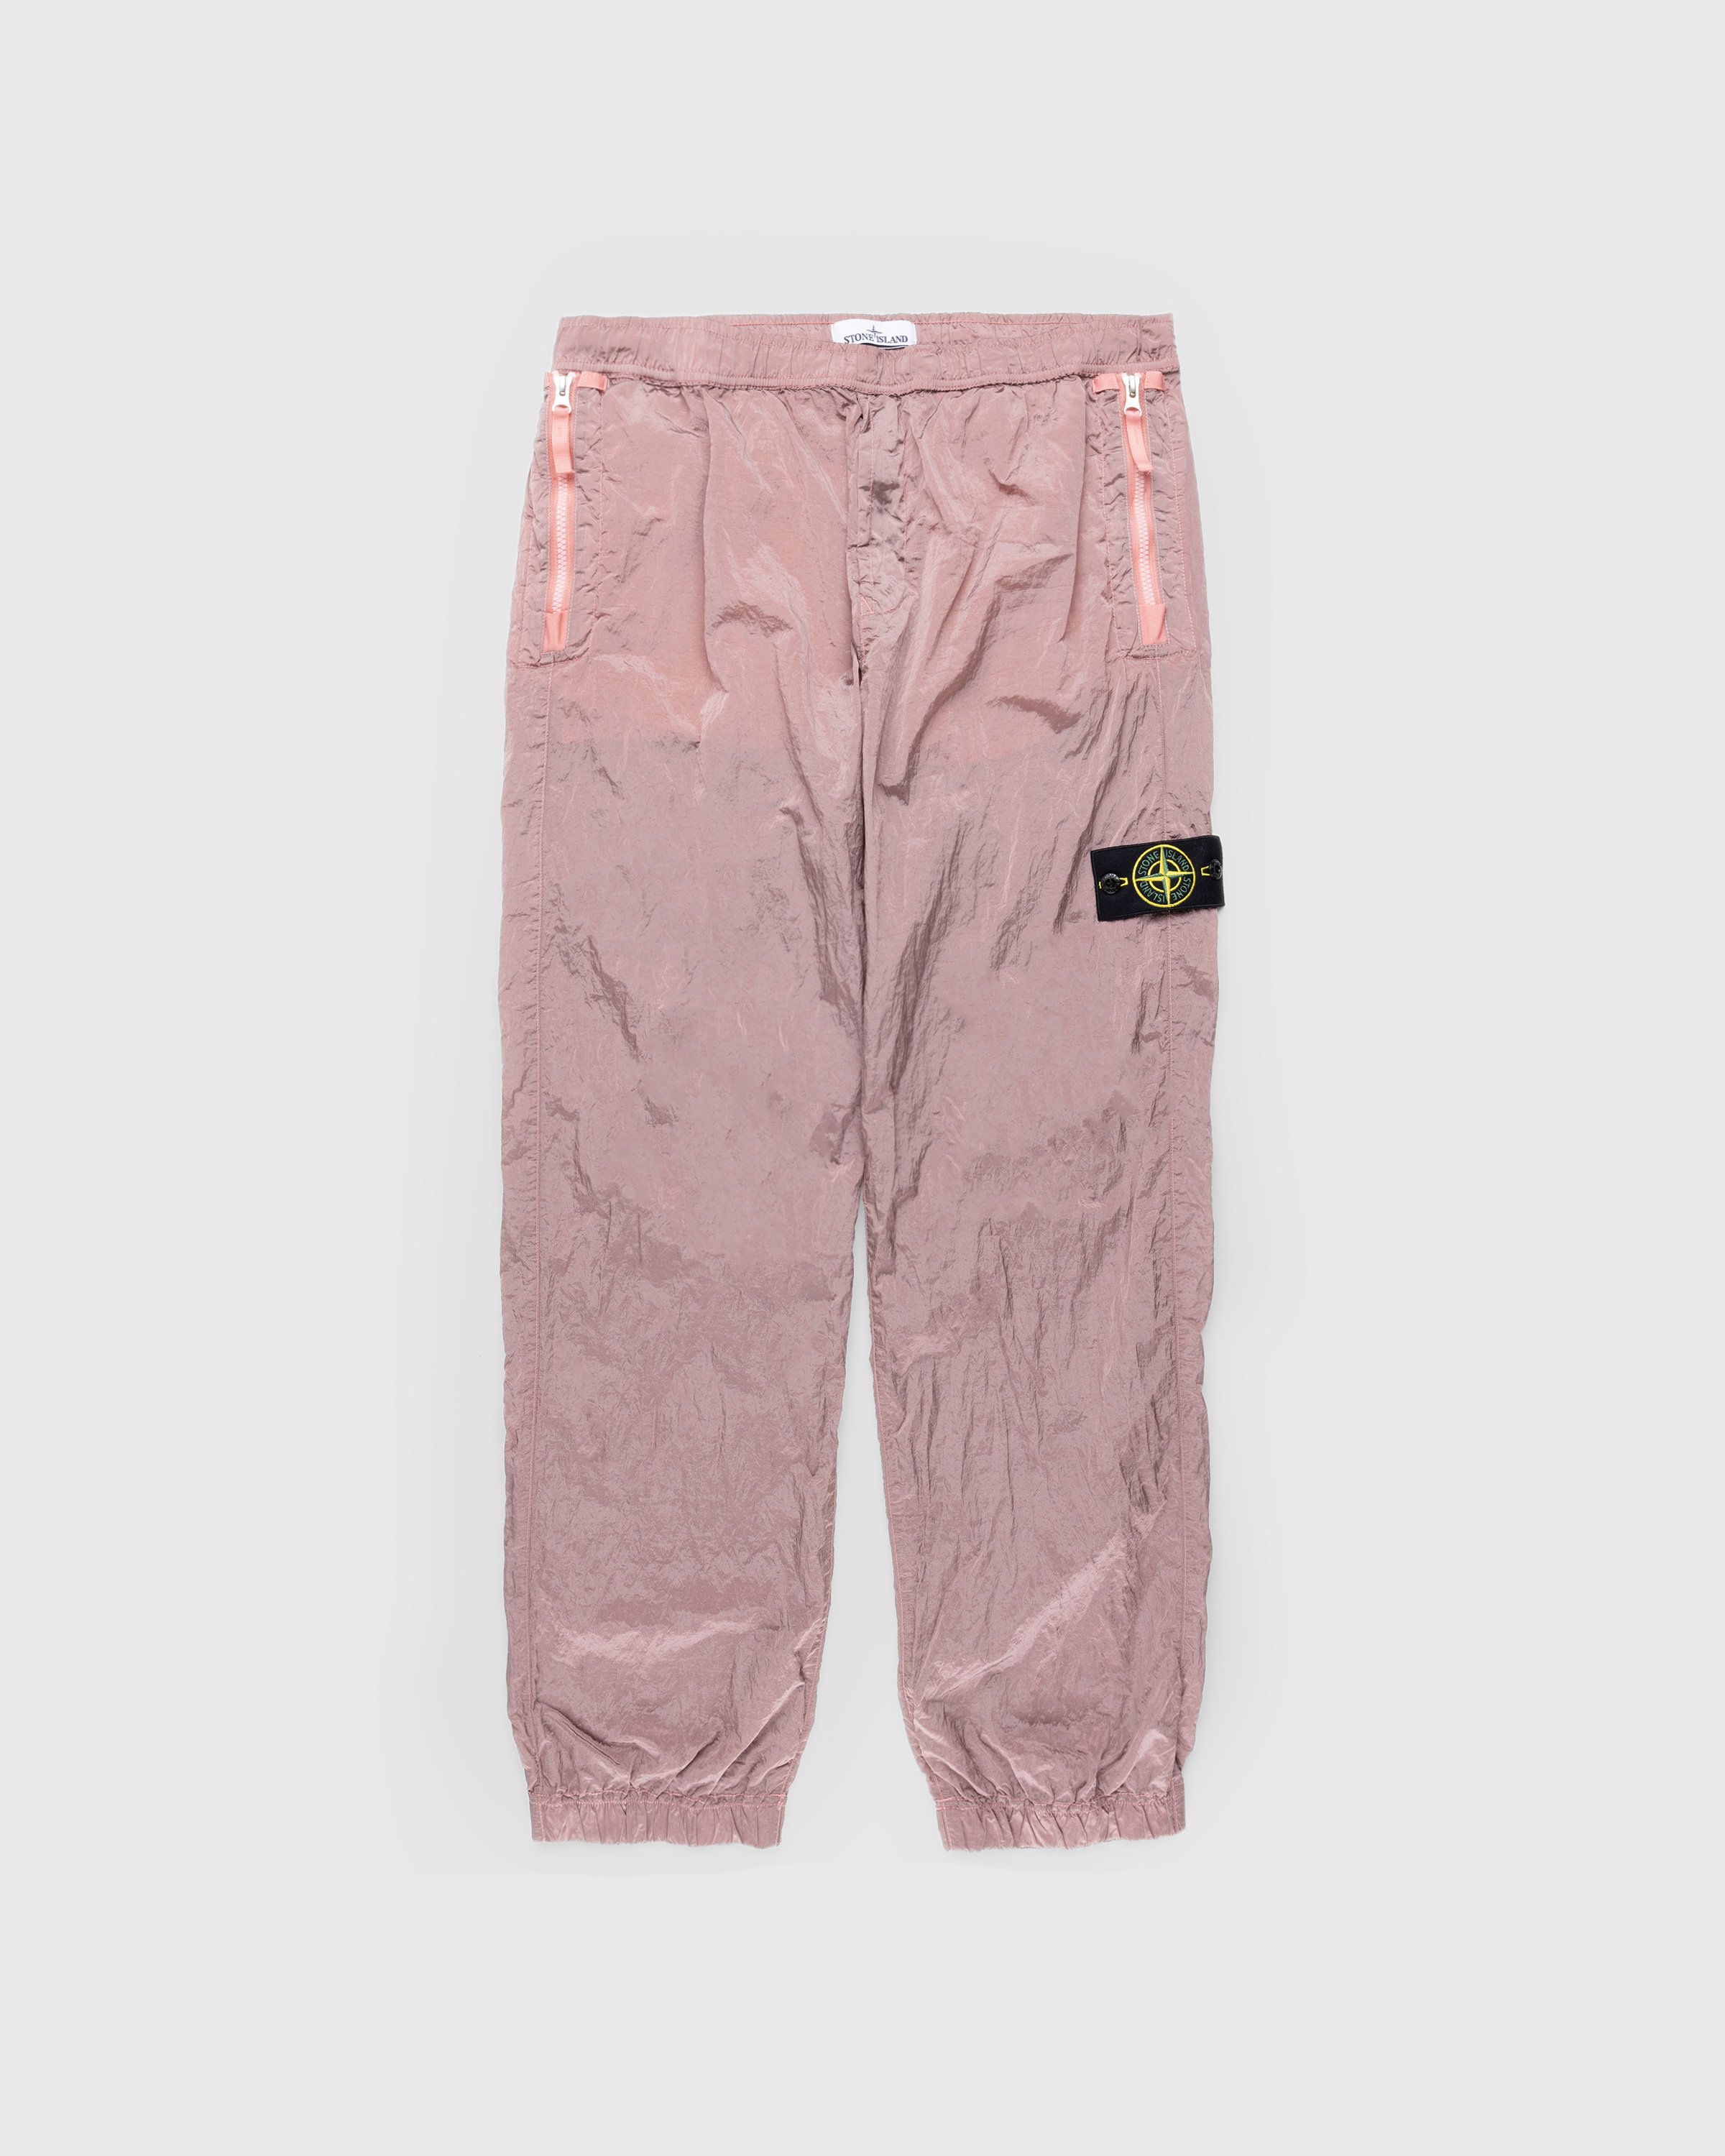 Stone Island - Pantalone Loose Pink 31019 - Clothing - Pink - Image 1